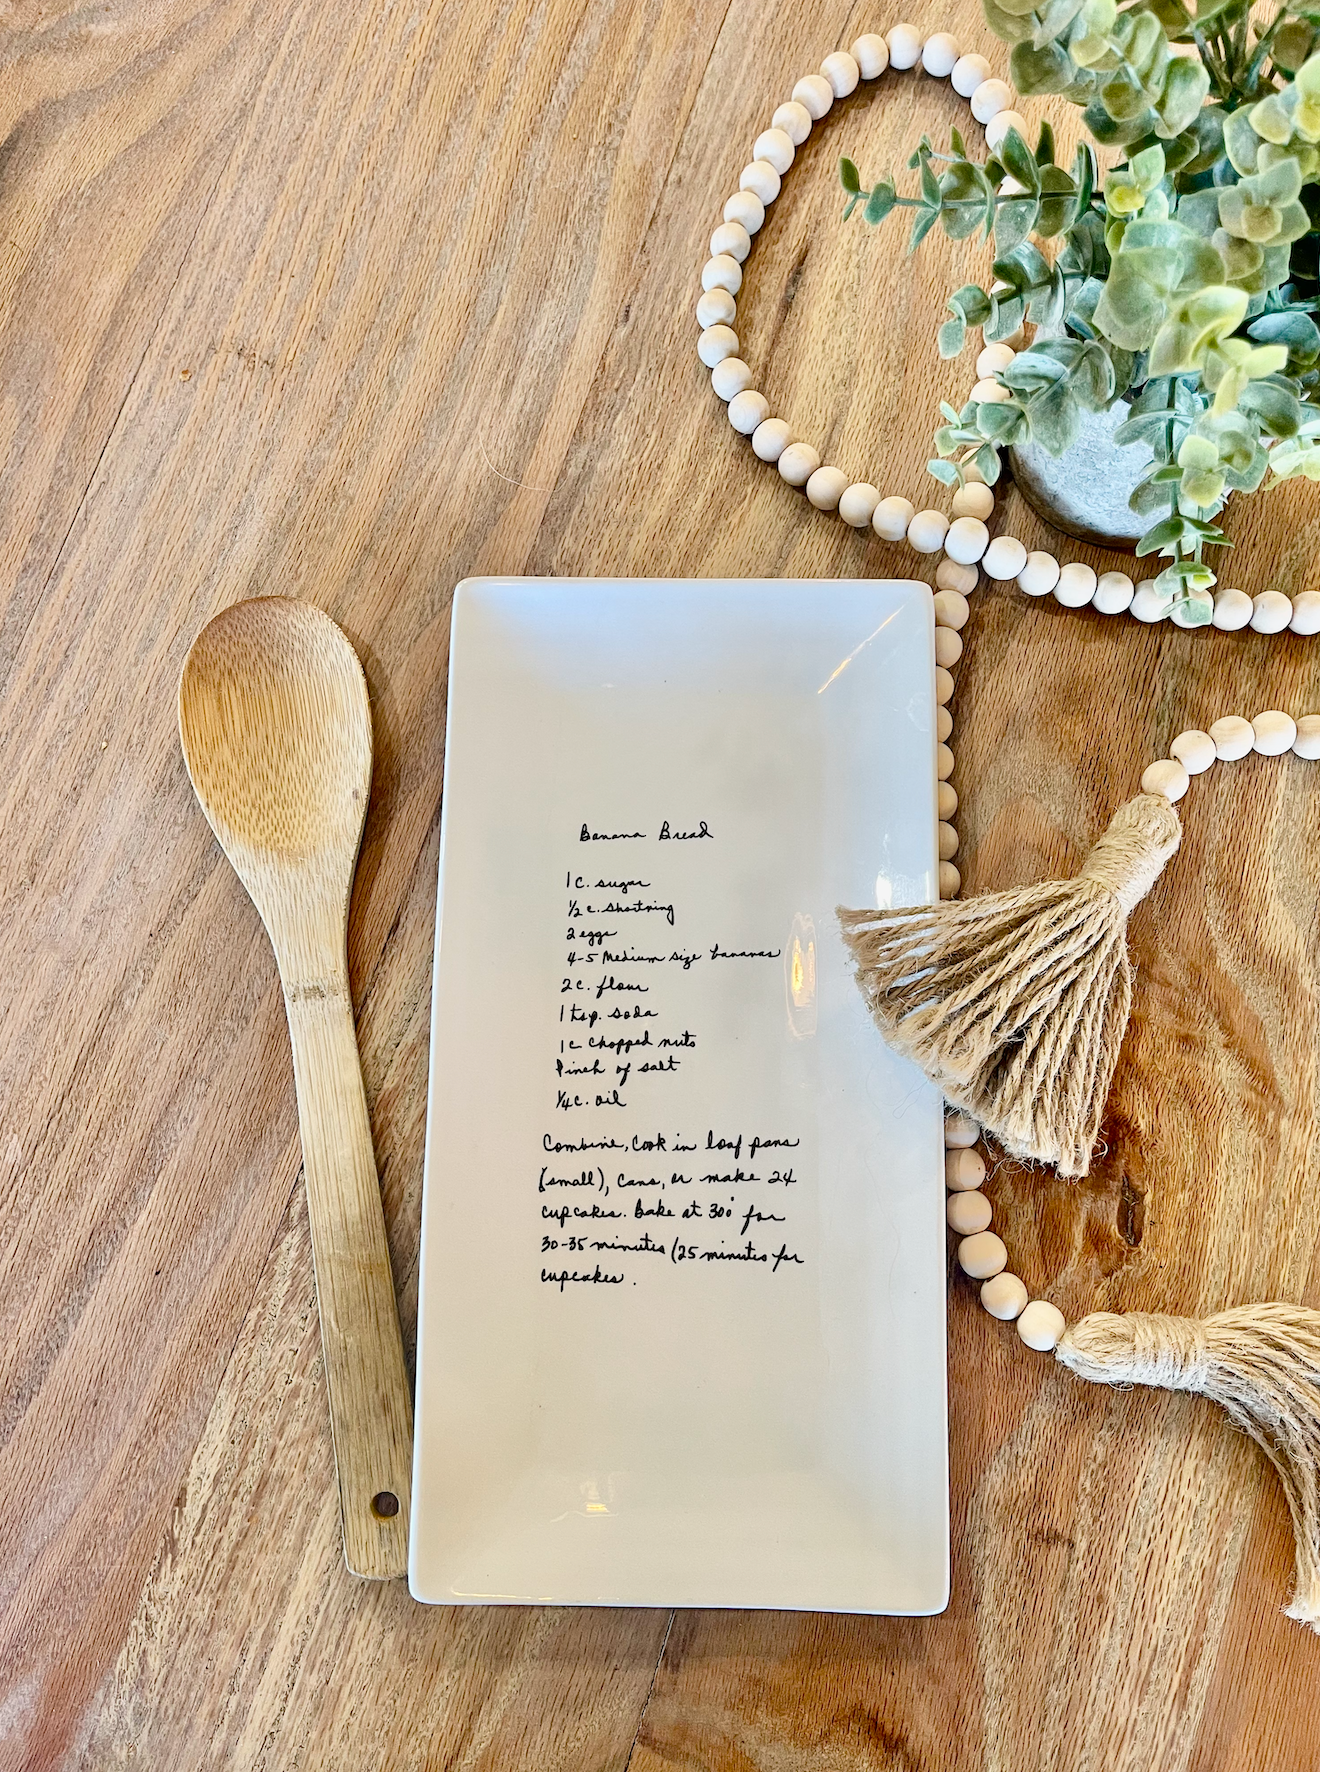 Your handwritten Recipe/Letter transferred to serving platter plate dish porcelain